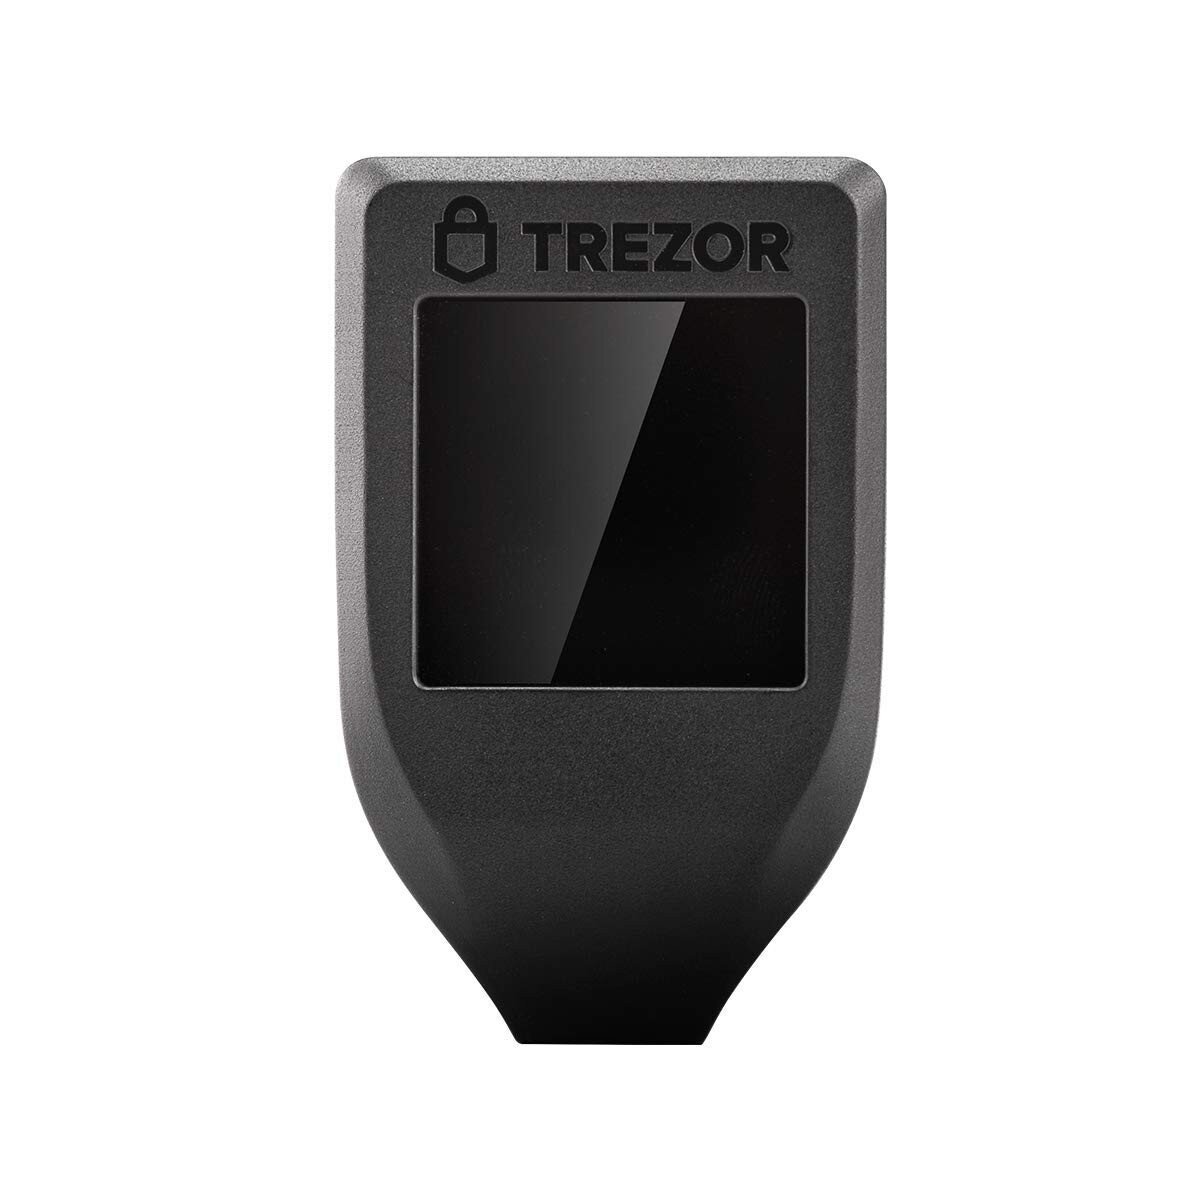 Buy TREZOR Model T Cryptocurrency Hardware Wallet online in United Arab Emirates - 0 UAE